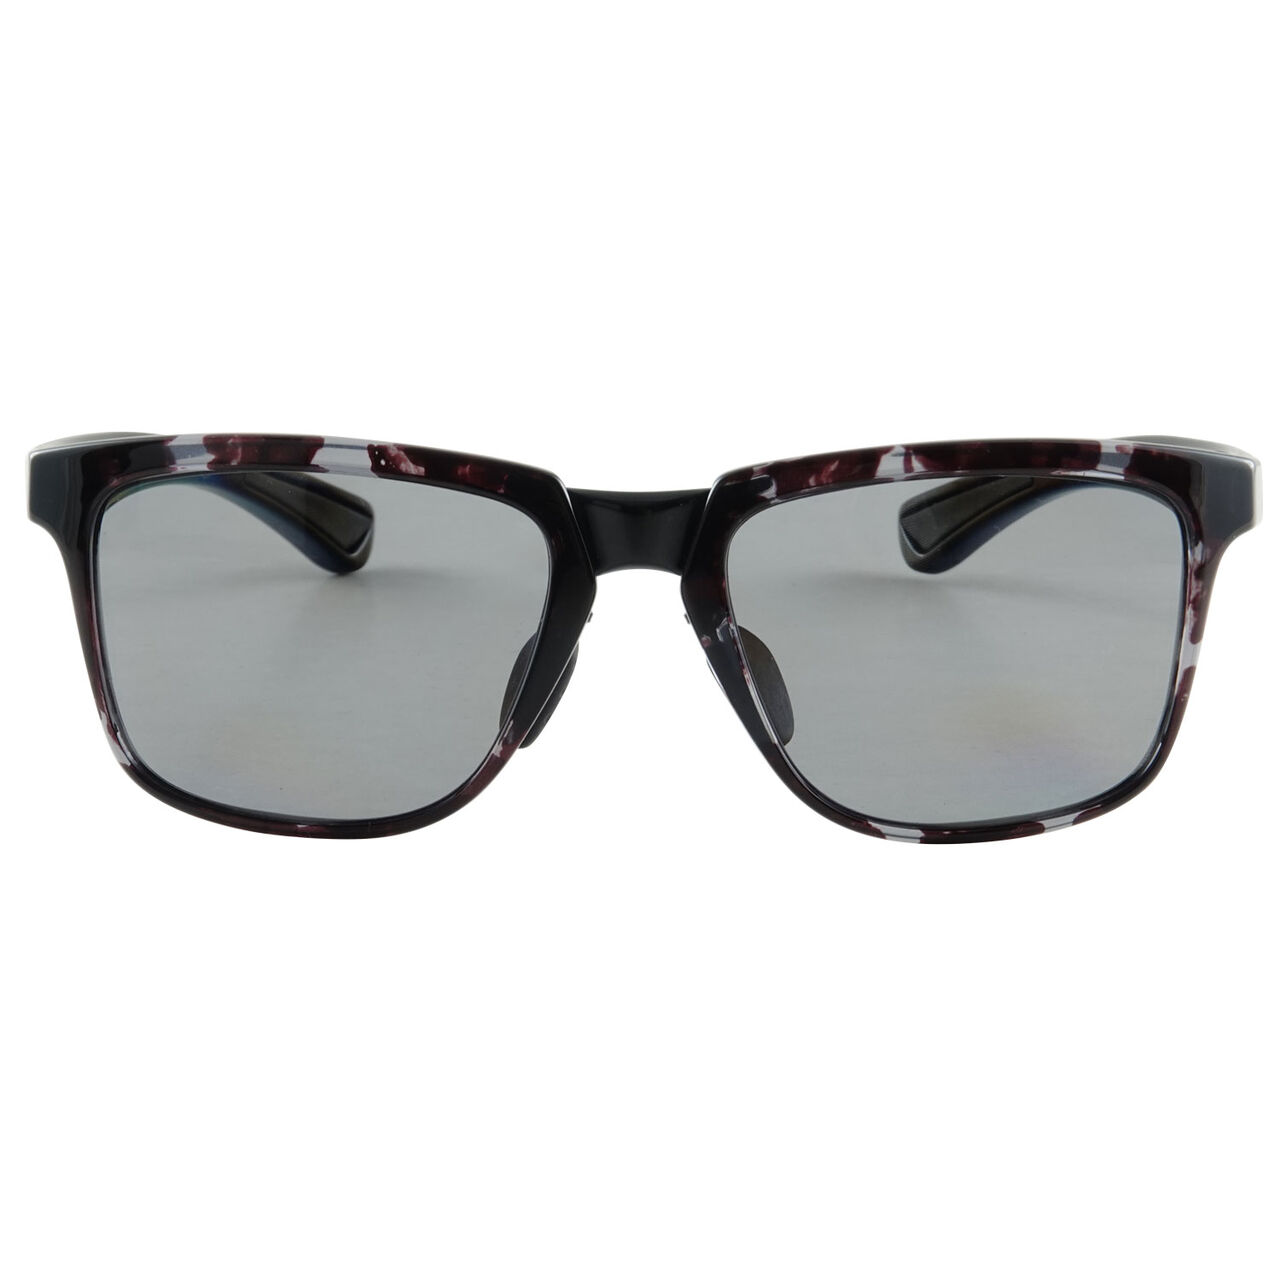 ER-4 Demi smoke frame/Polarized Smoke lens Sunglasses | SWANSⓇ